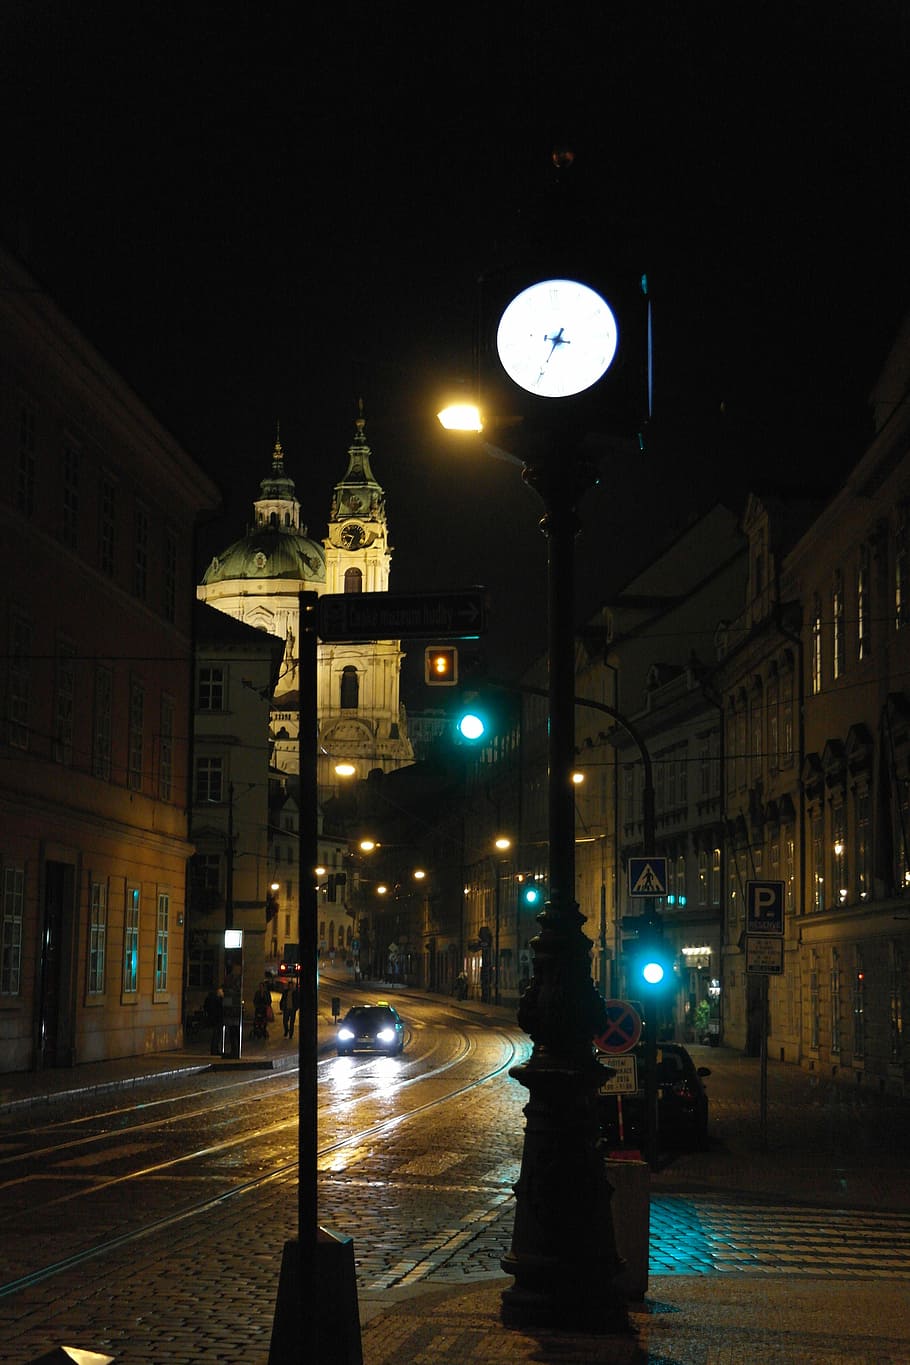 Czech Republic, Night, Contrast, Prague, light reflections, lights, castle, panel, illuminated, architecture